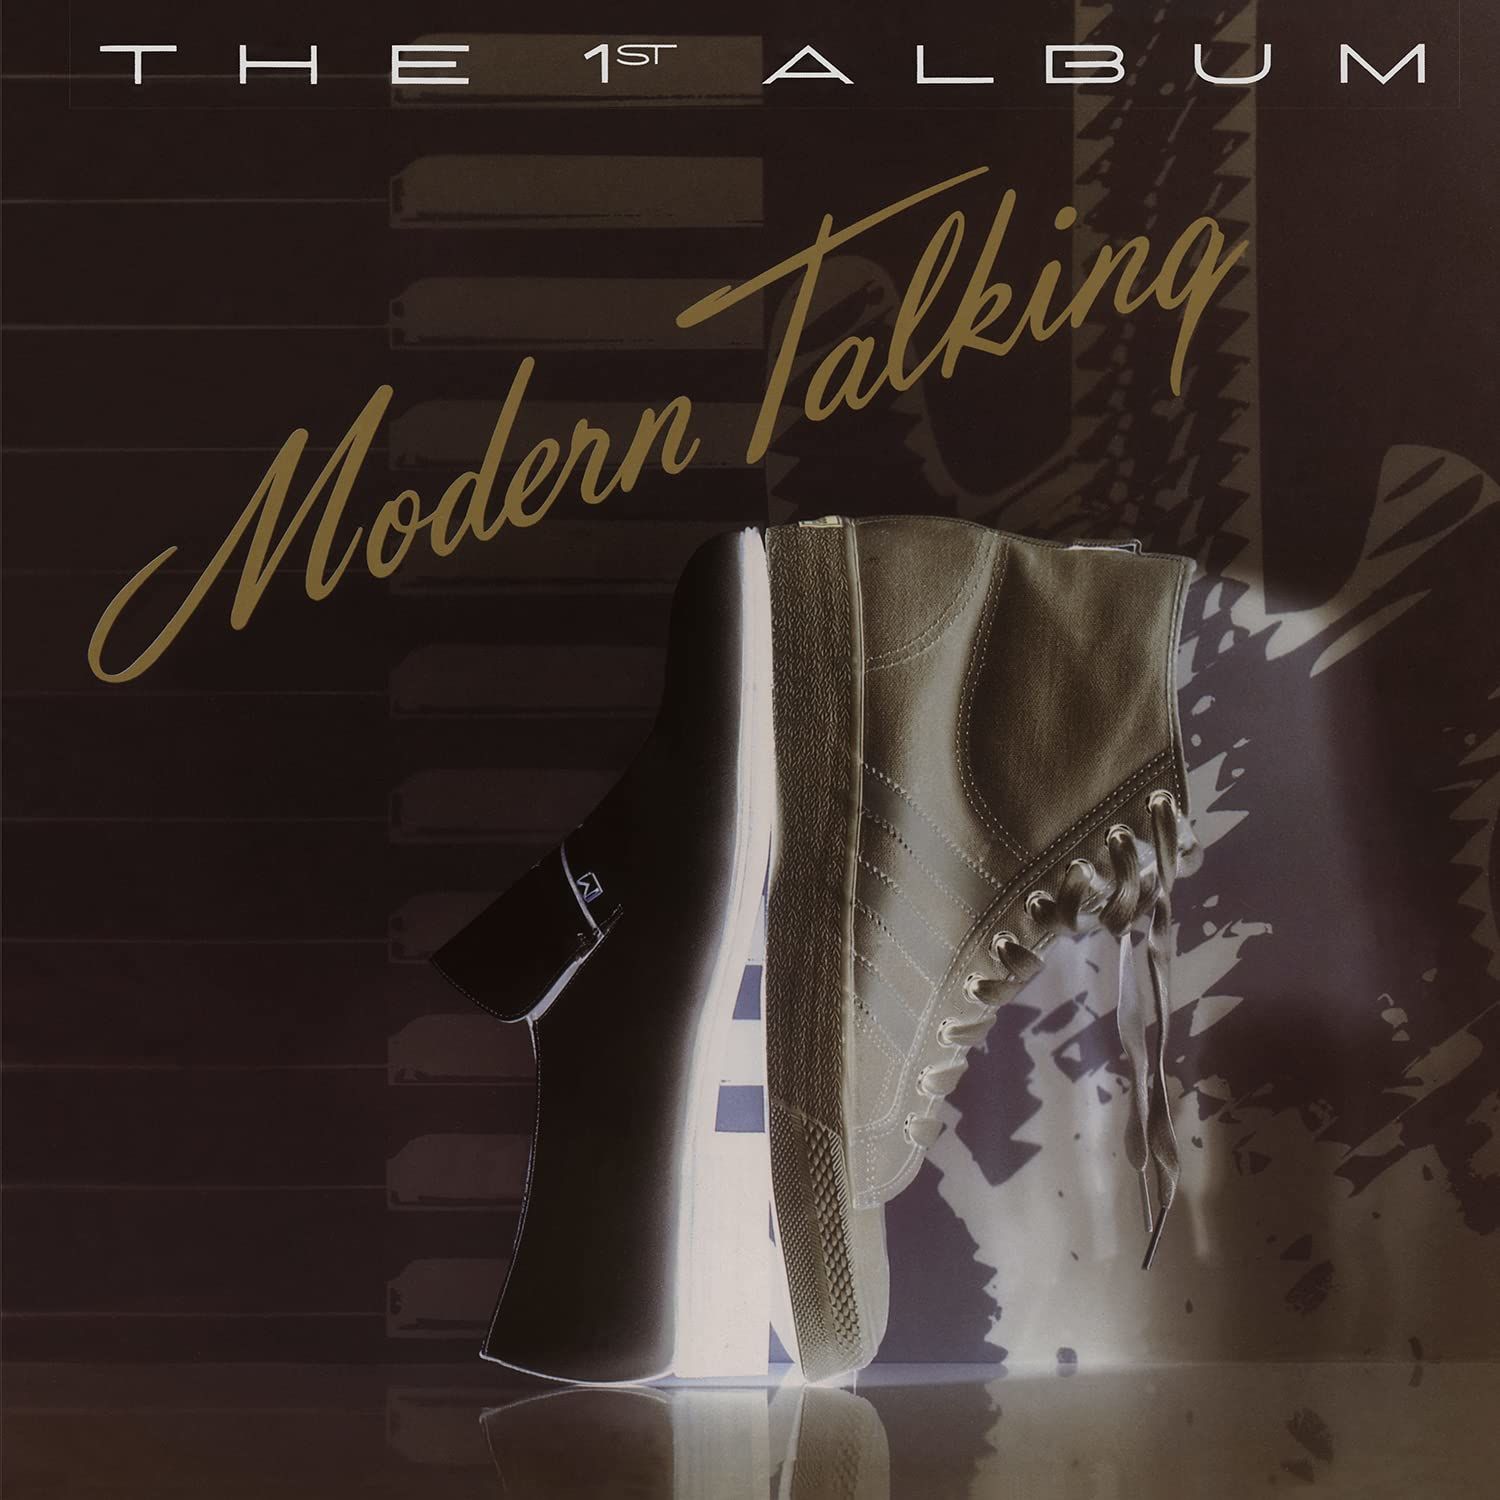 MODERN TALKING - 1ST ALBUM (1985) - LP 180GR 2023 SILVER MARBLED COLOURED EDITION SIFIR PLAK